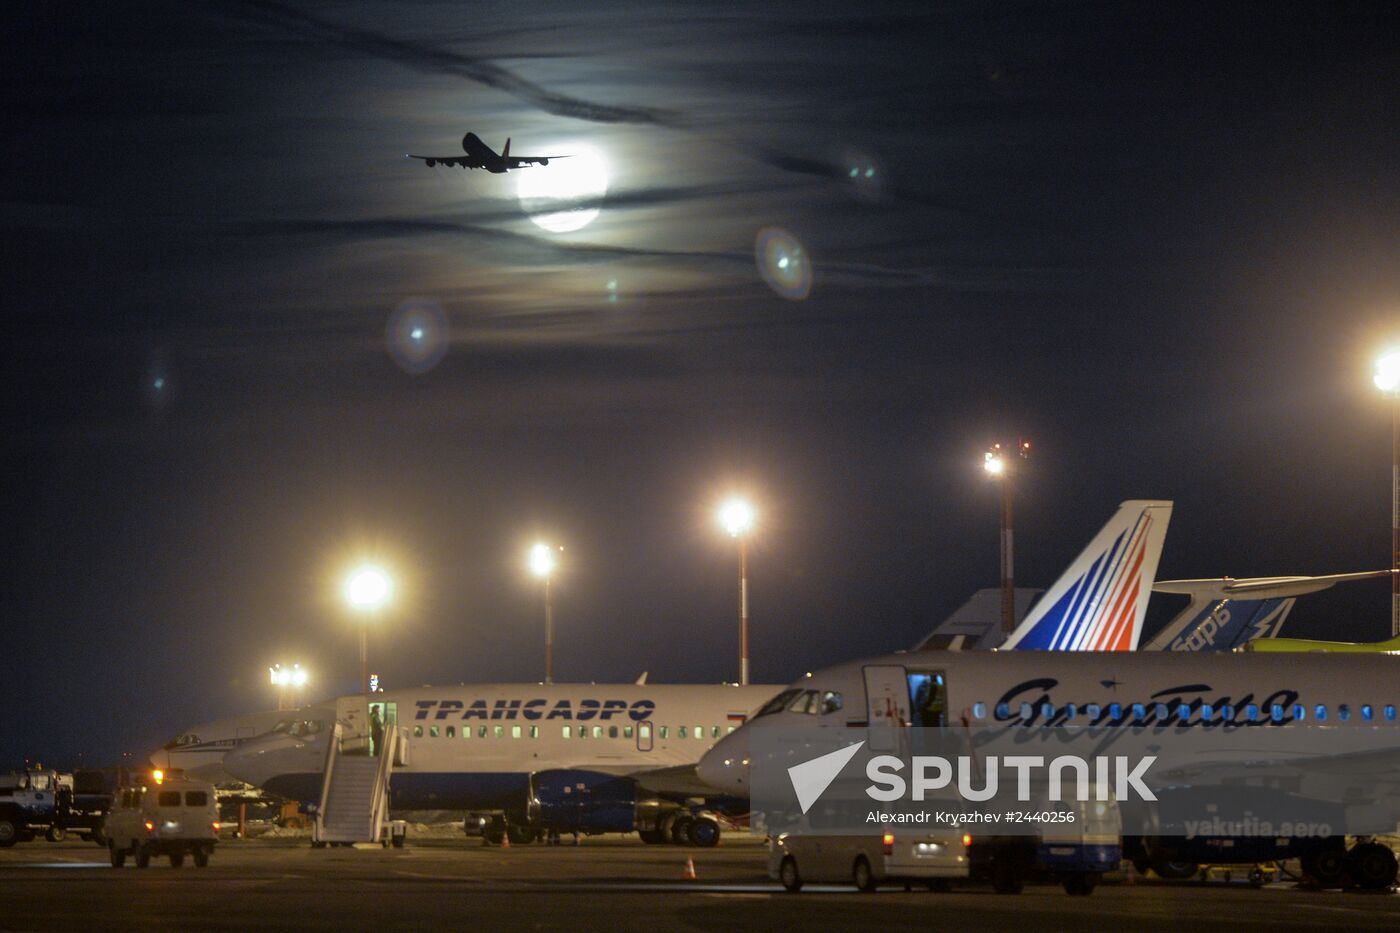 Tolmachyovo Airport in Novosibirsk